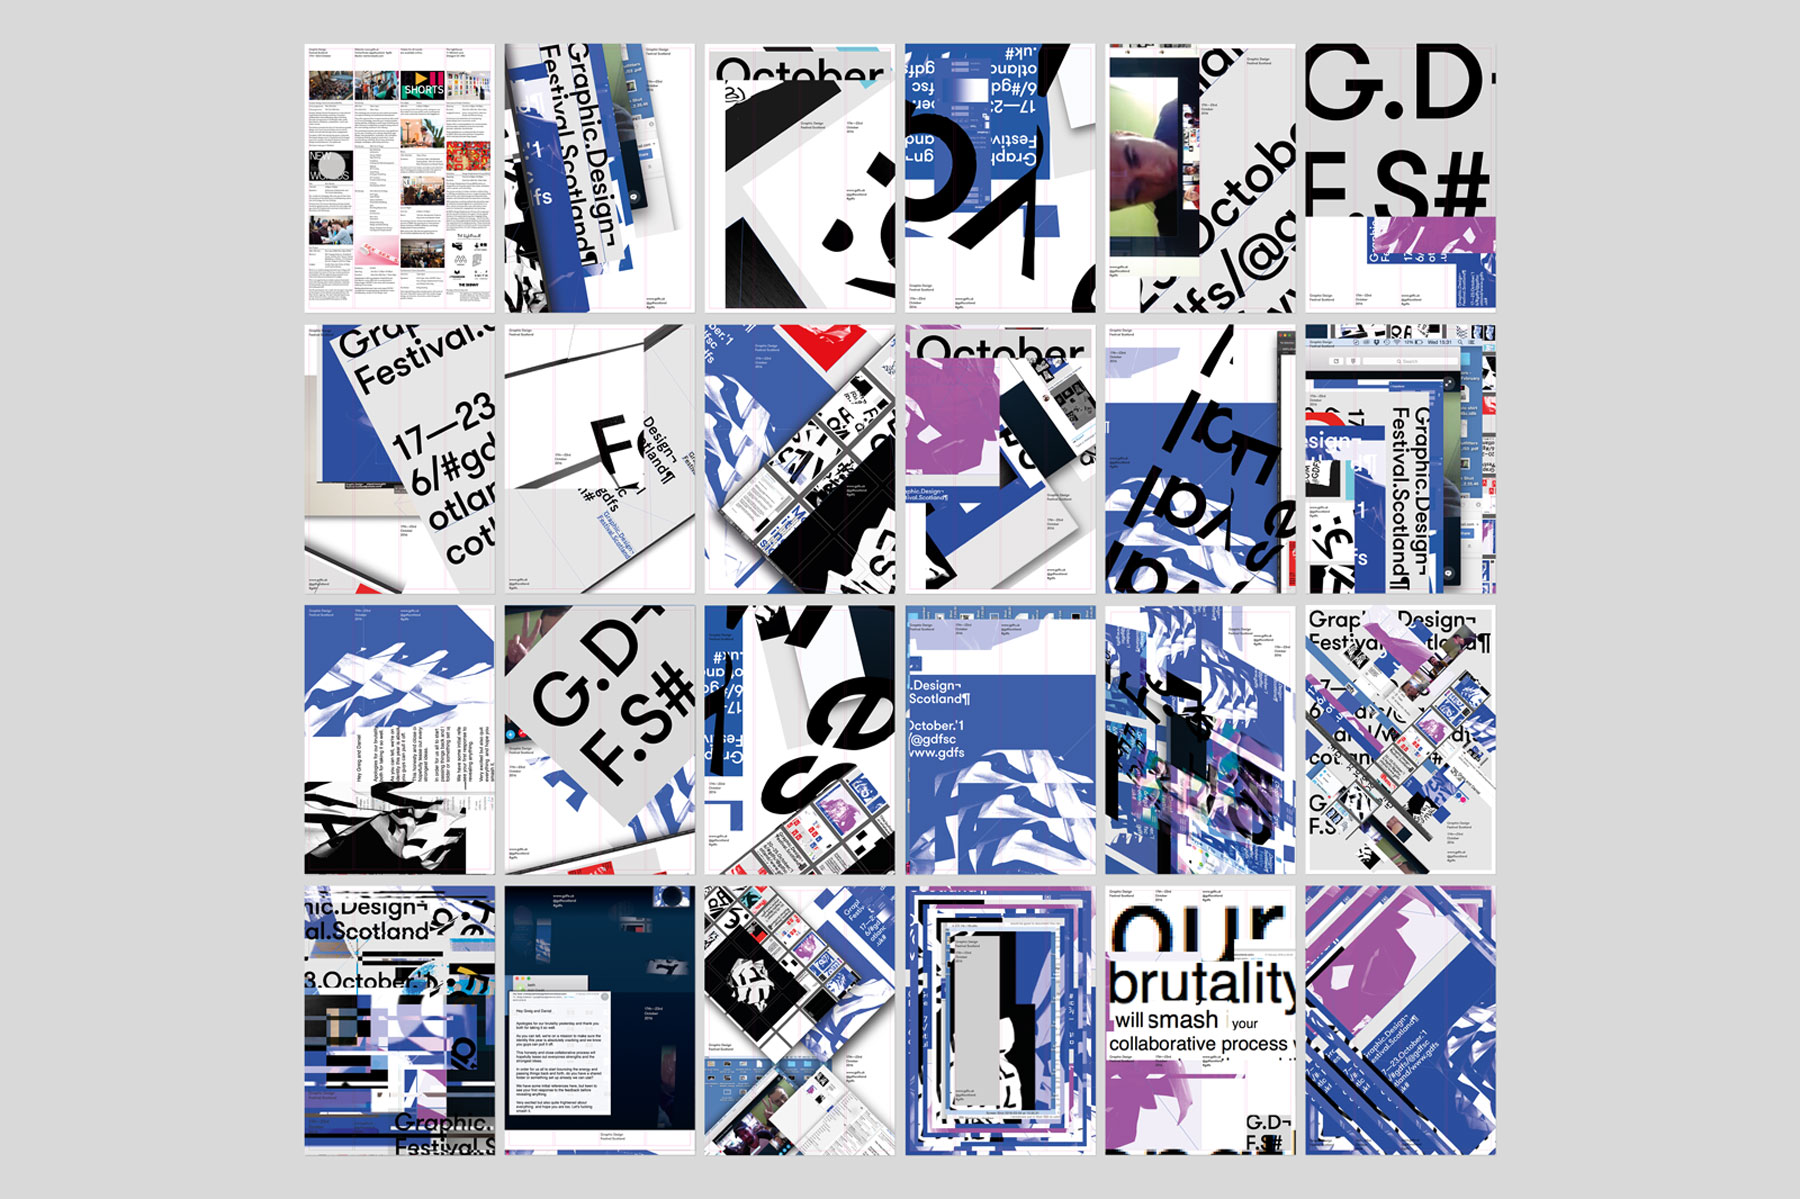 11gdfs-16-custom-identity-posters